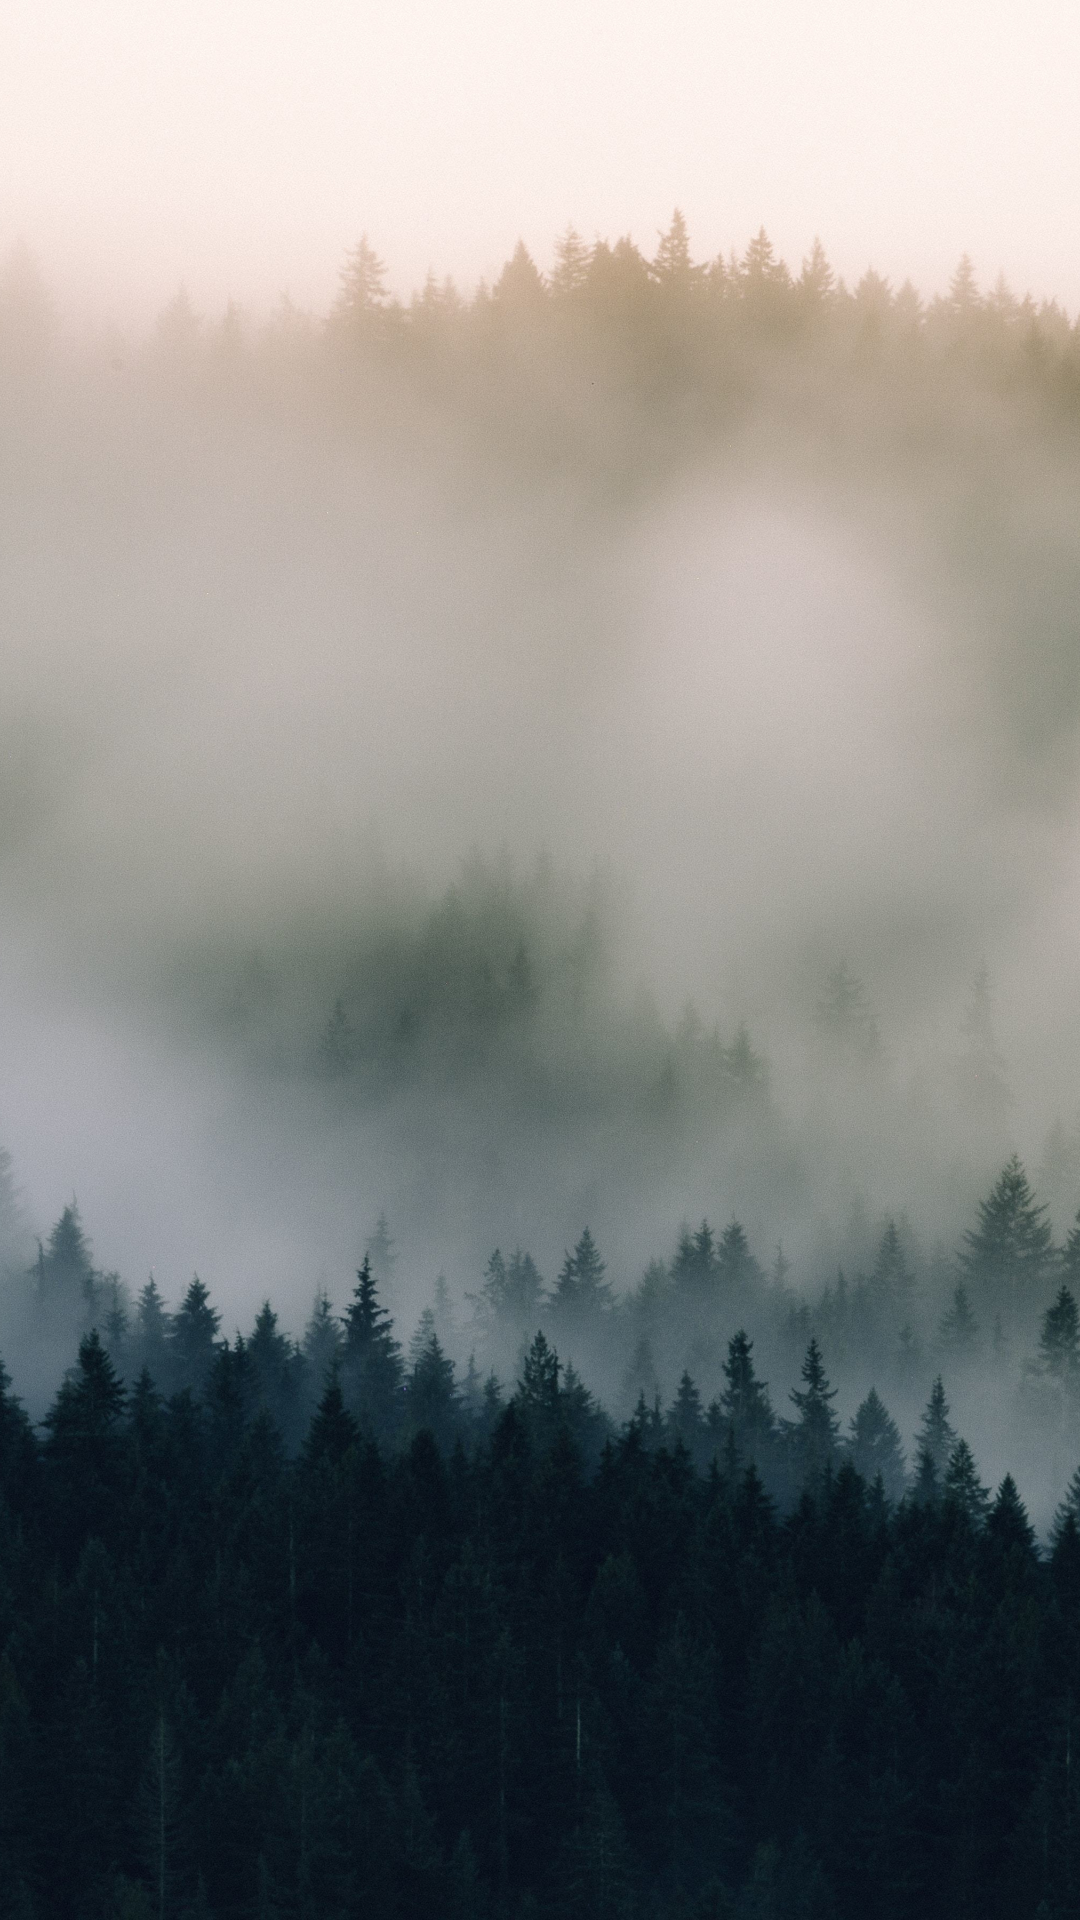 Download wallpaper 1080x1920 mist, fog, pine trees, nature, 1080p ...